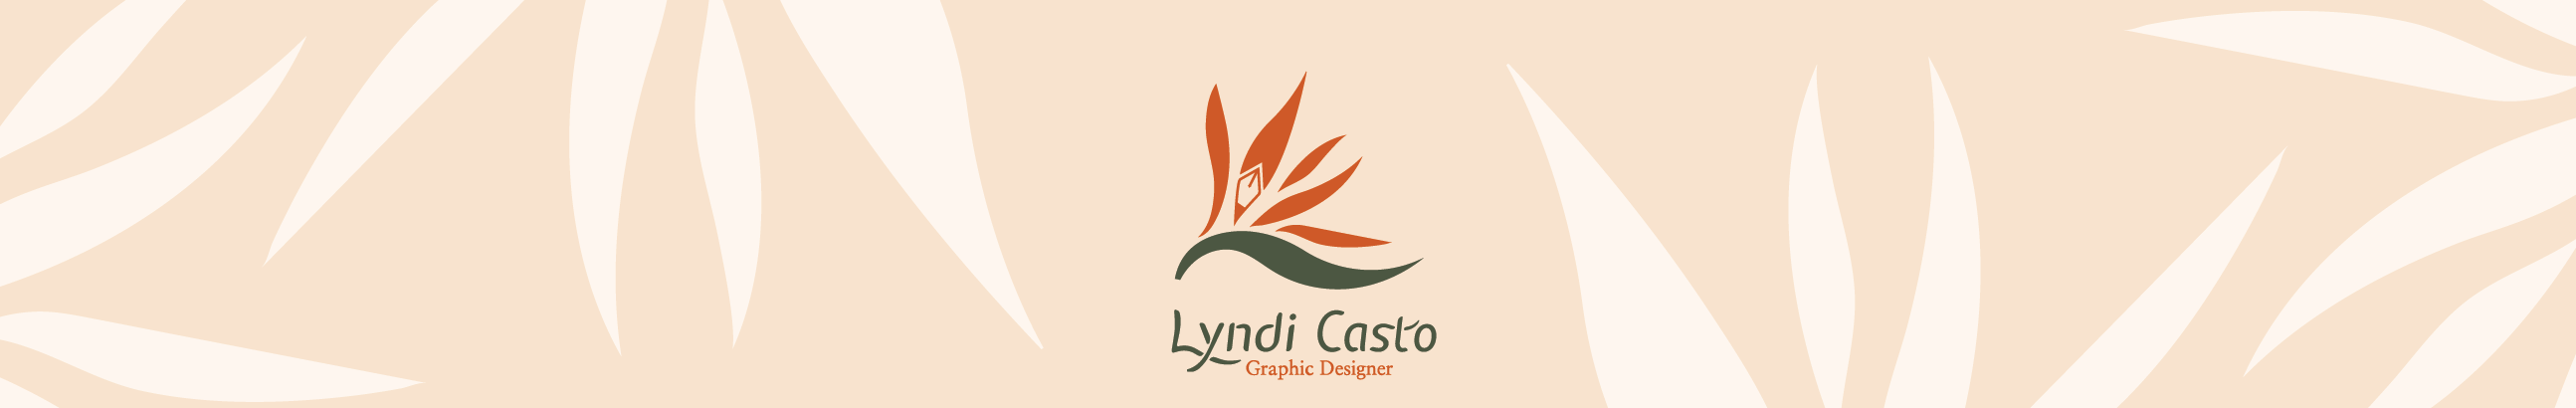 Banner de perfil de Lyndi Casto